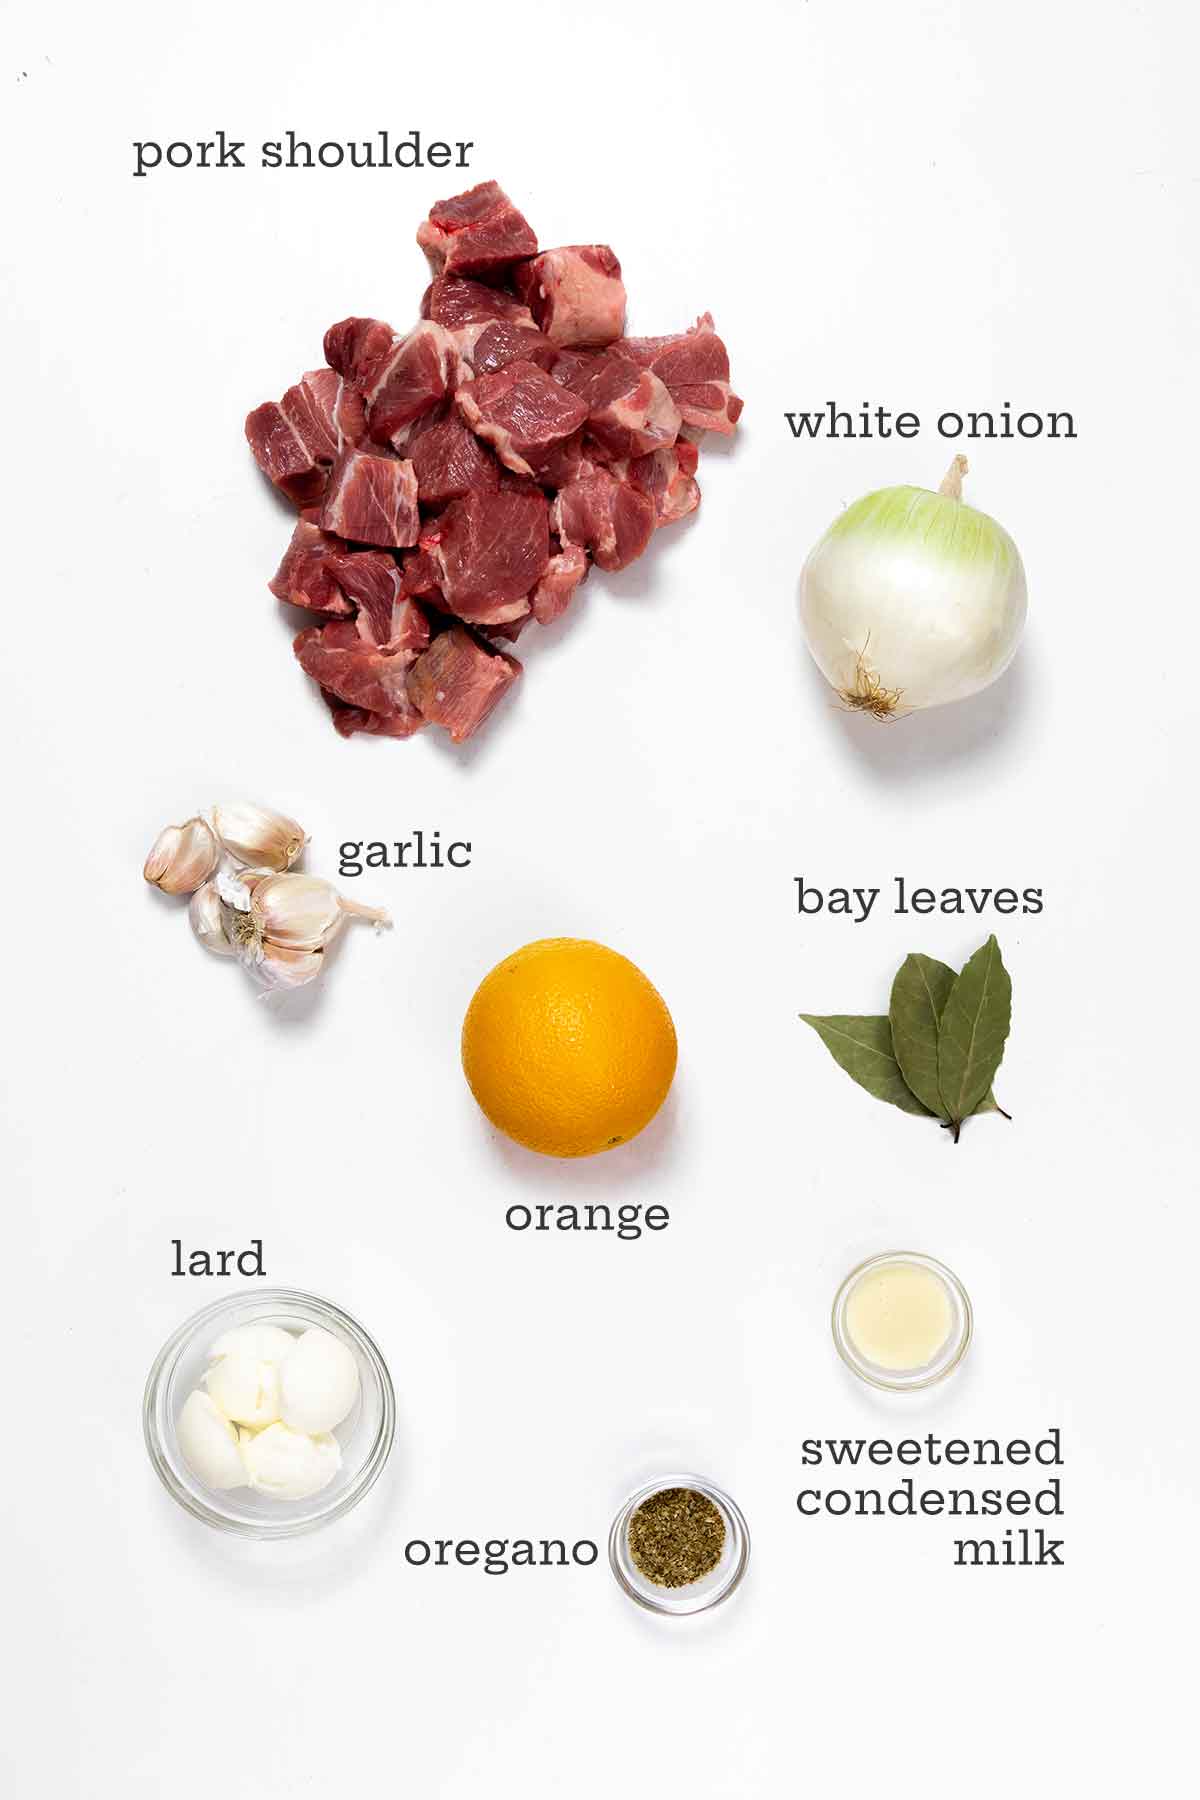 Ingredients for carnitas--pork shoulder, onion, garlic, oranges, bay leaves, lard, oregano, and sweetened condensed milk.